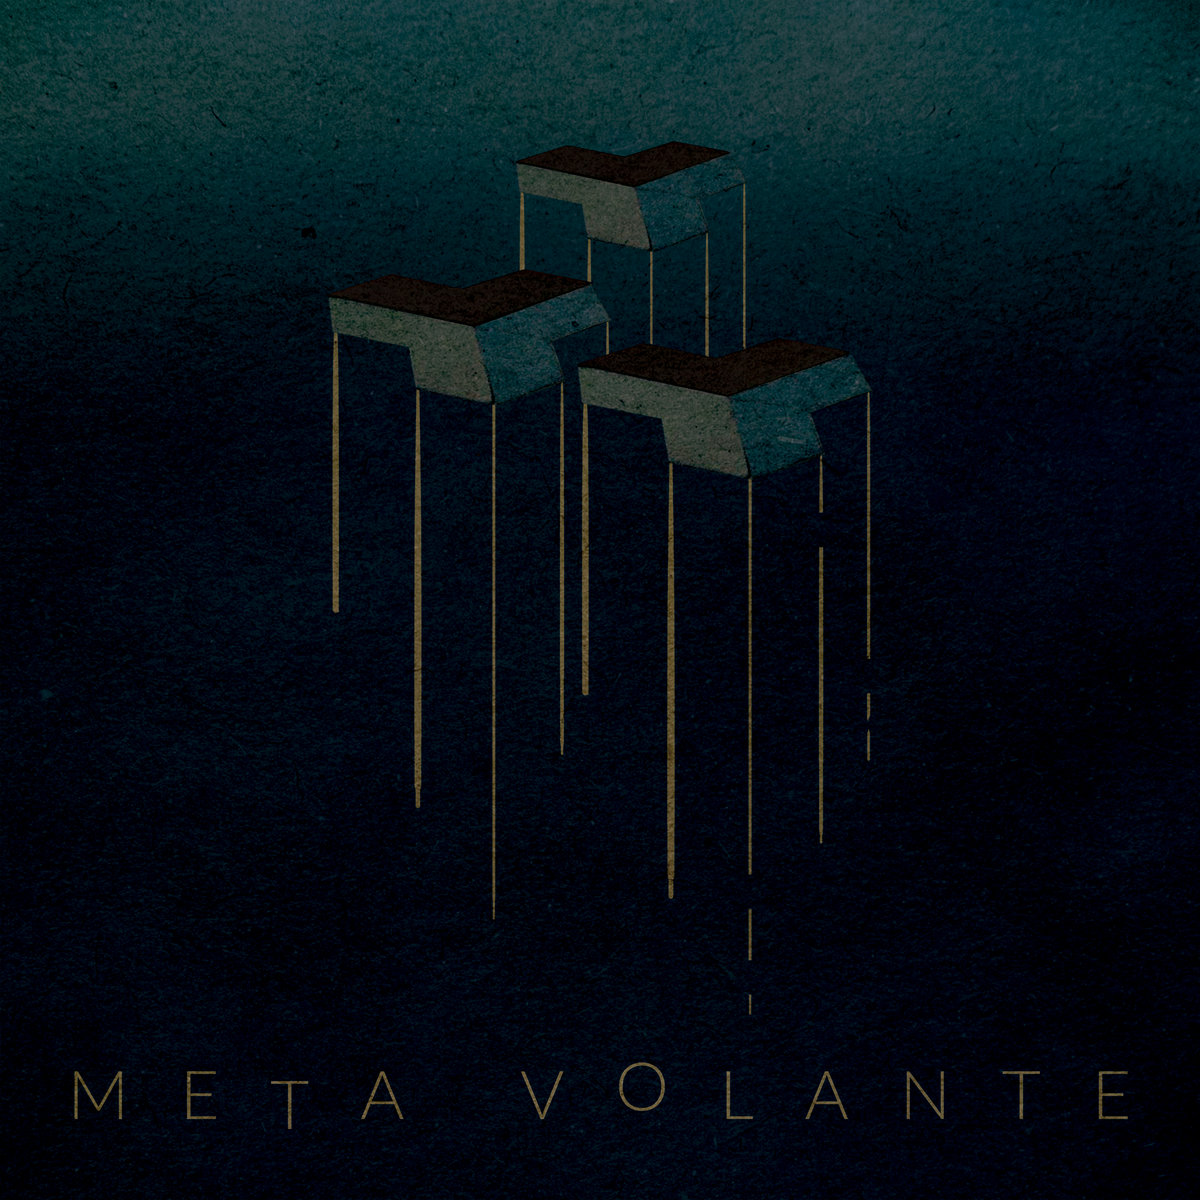 Image of Meta Volante